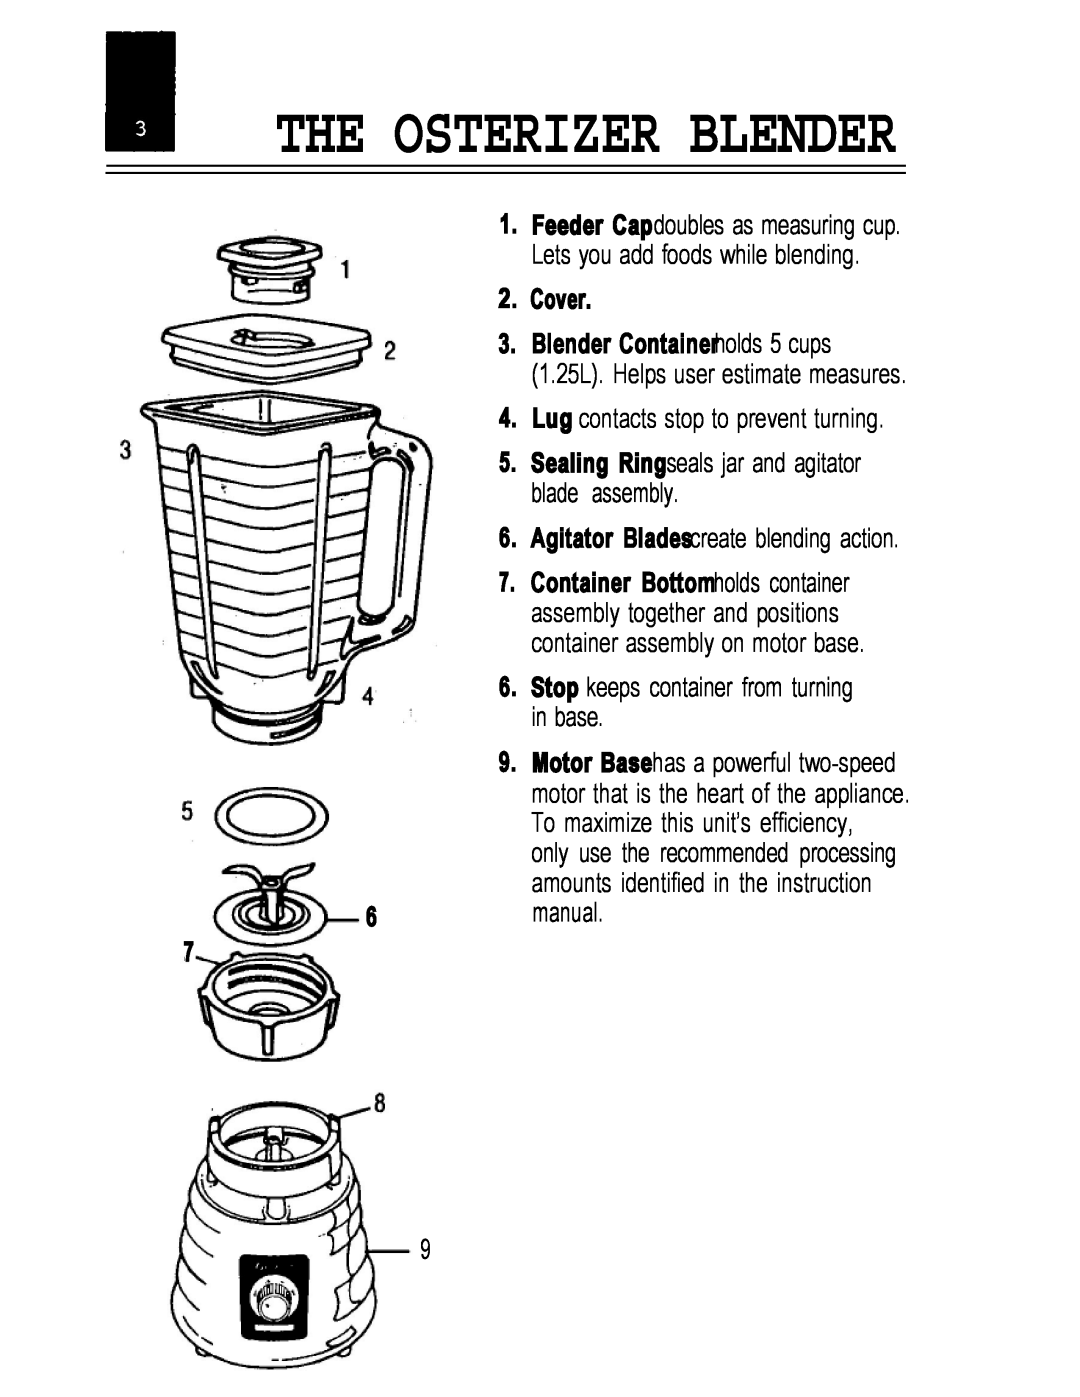 Oster IZER BLENDER/LIQUEFIER manual The Osterizer Blender, Cover 3.Blender Containerholds 5 cups 